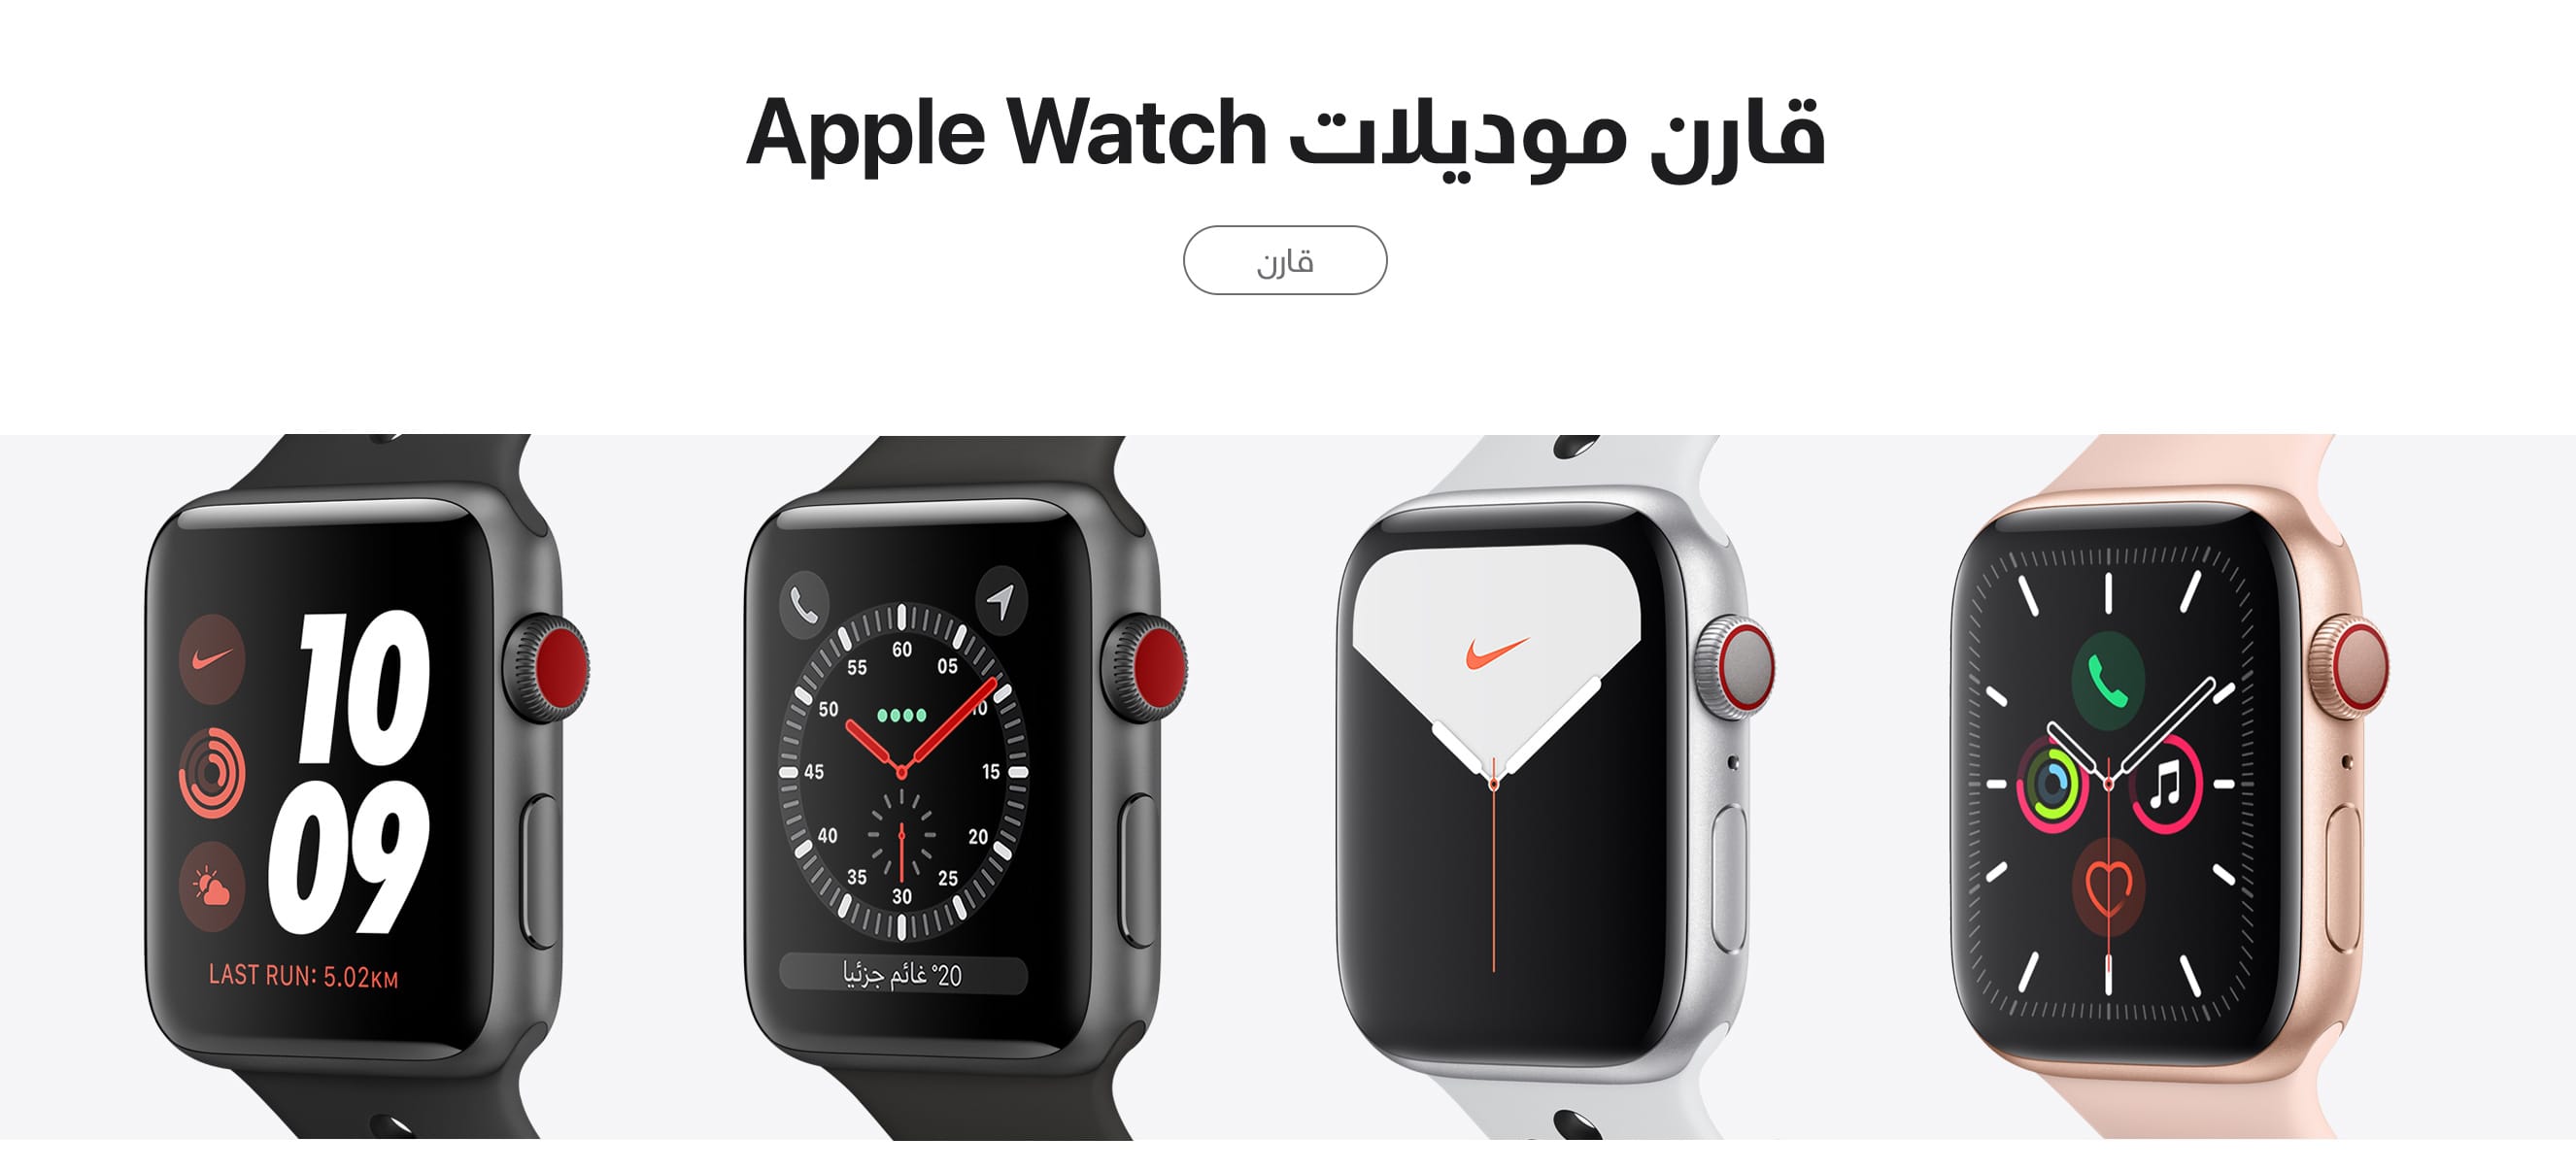 apple-watch-series5-price-etisalat-uae-overview-ar-6